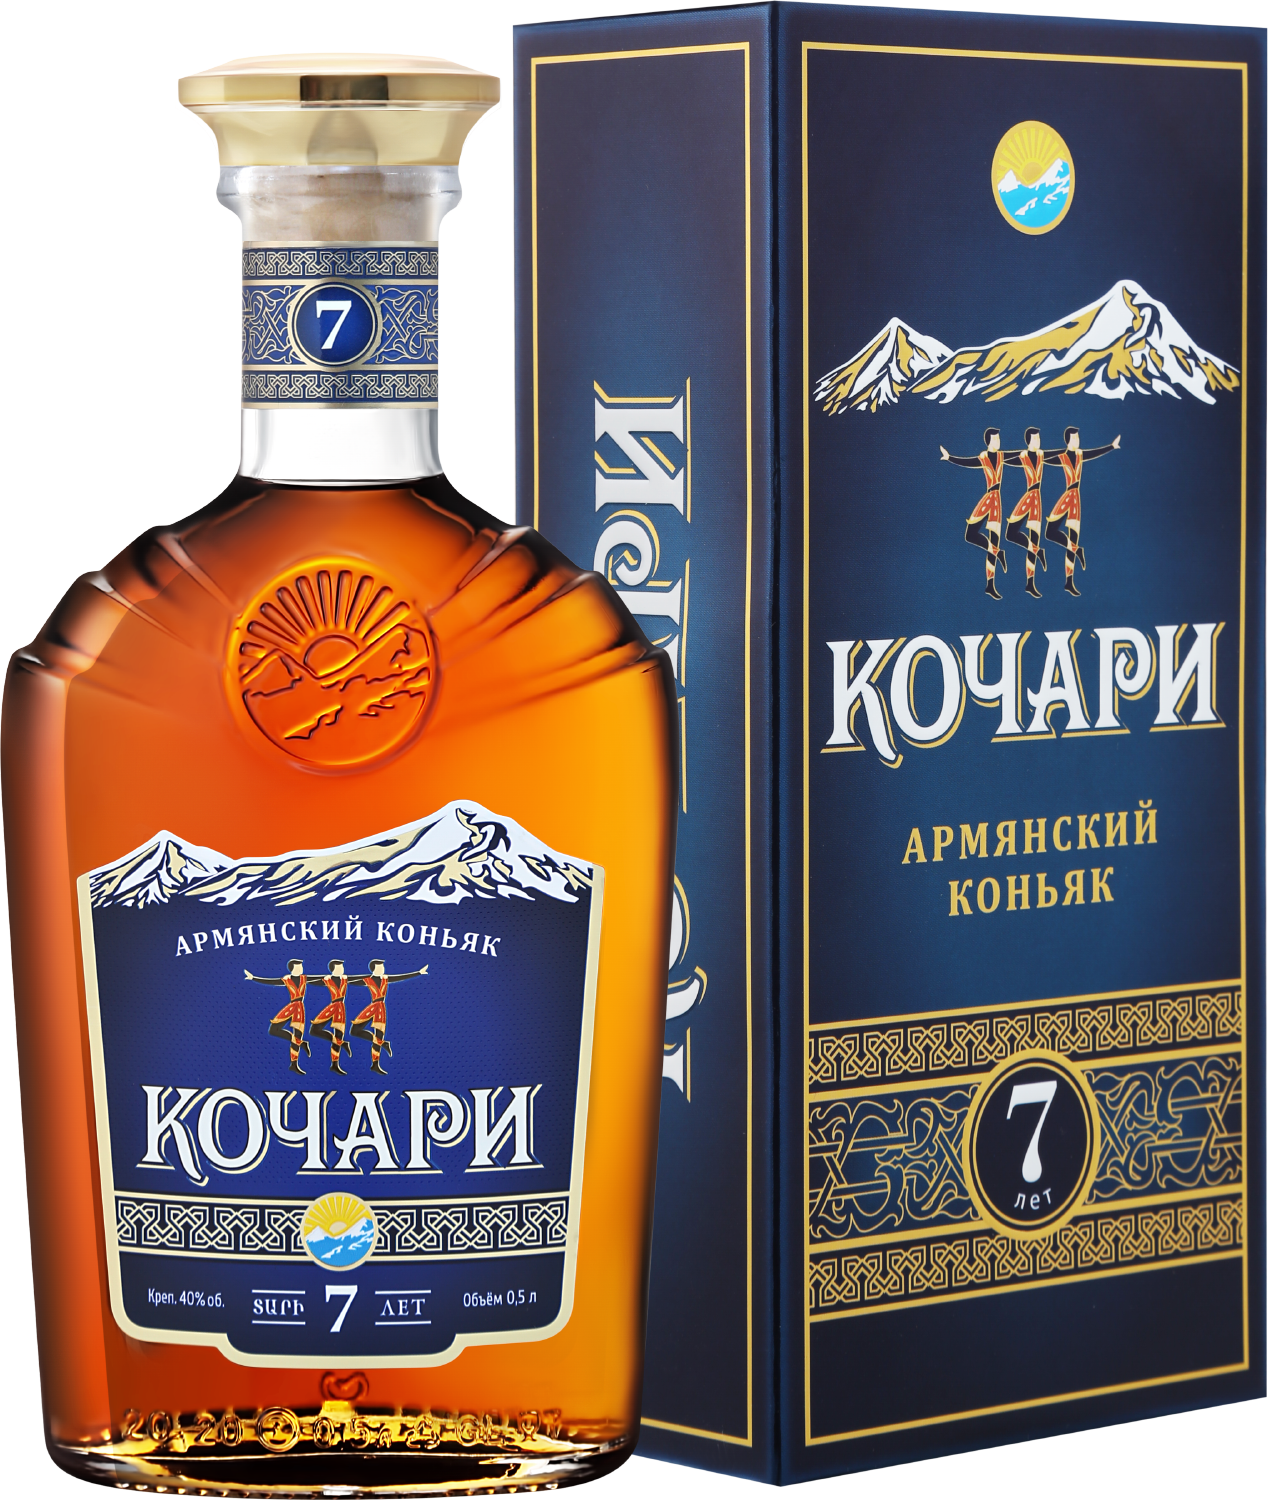 ararat nairi armenian brandy 20 y o gift box Kochari Armenian Brandy 7 Y.O. (gift box)